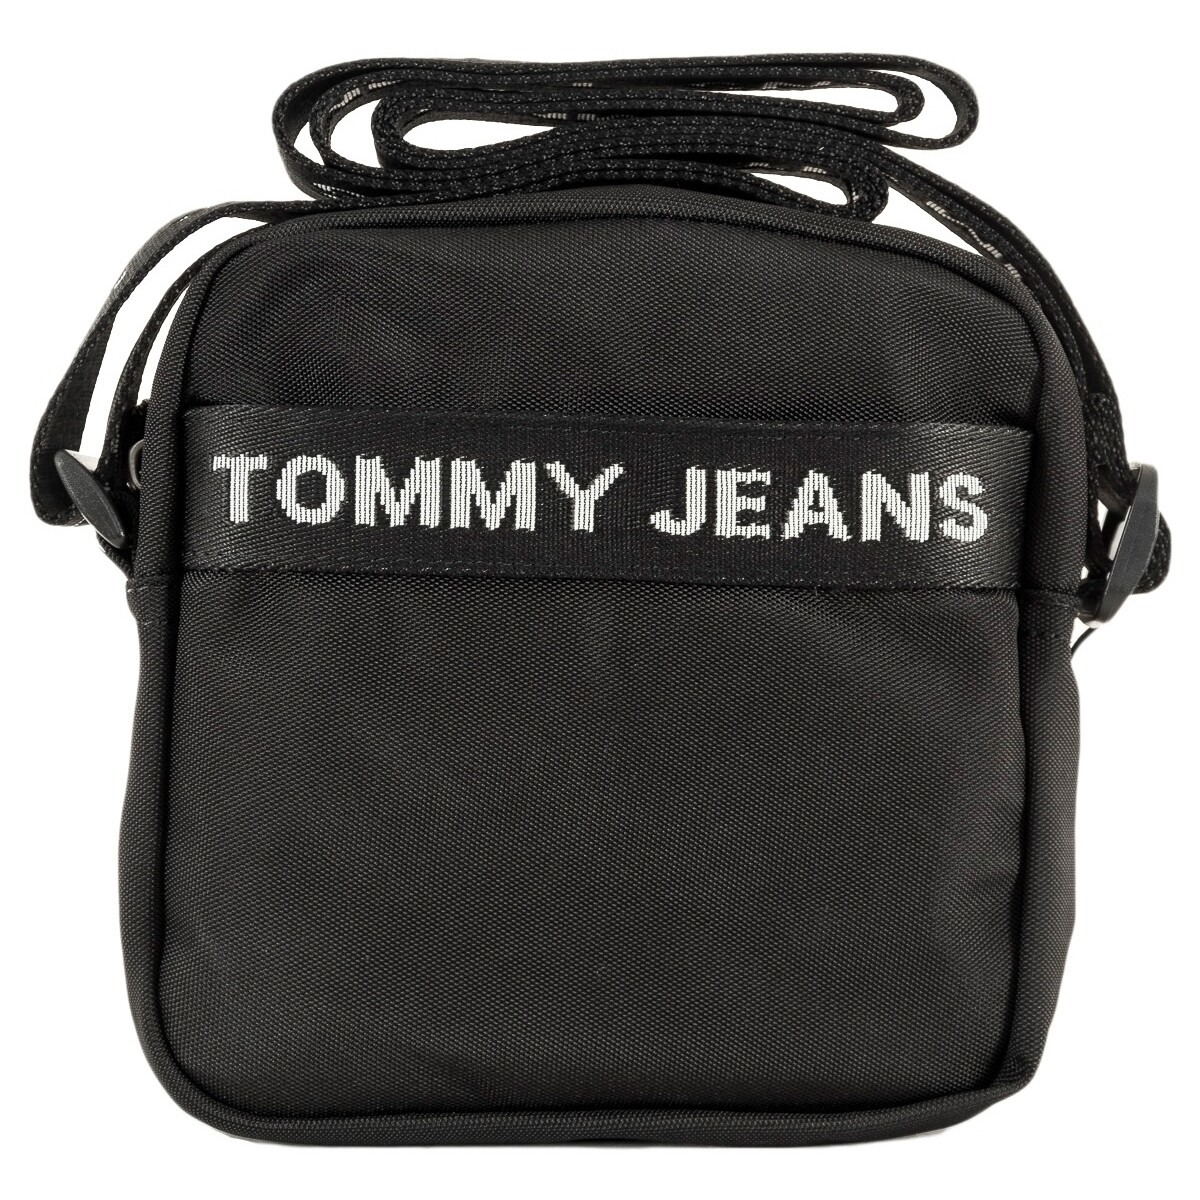 Sacs Pochettes / Sacoches Tommy Jeans am0am11524 Noir